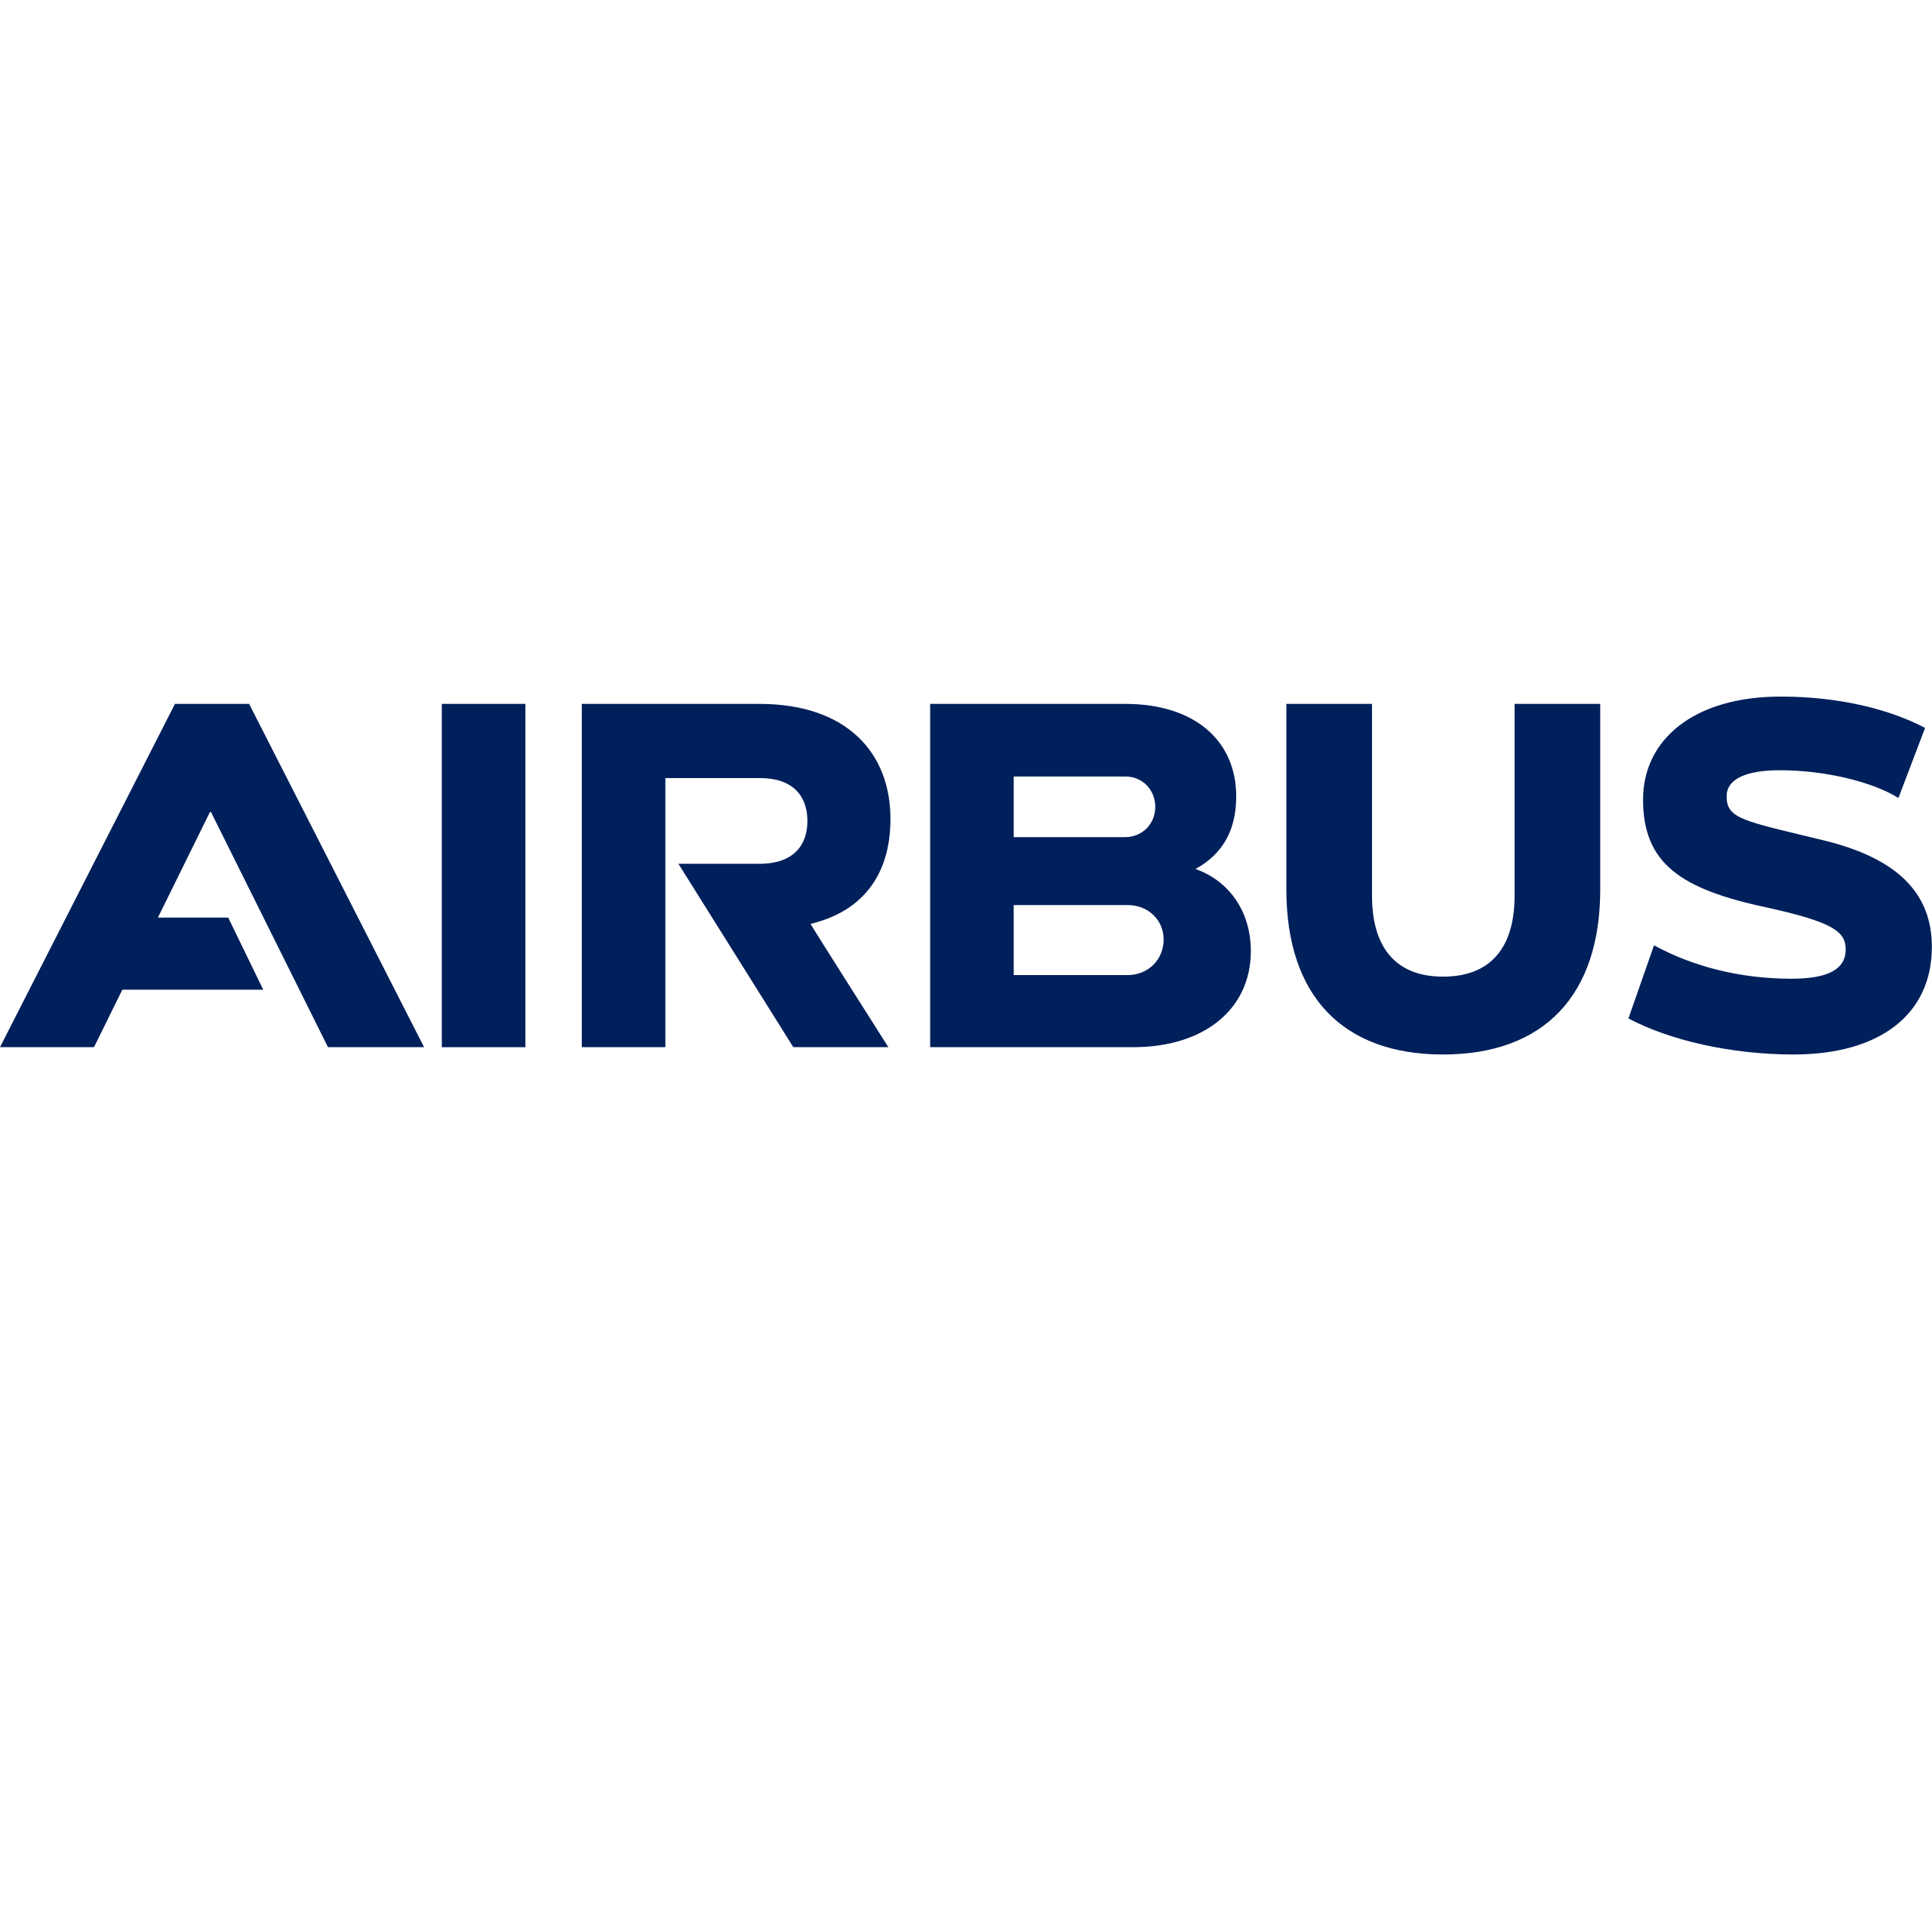 Airbus_Logo_2017.svg